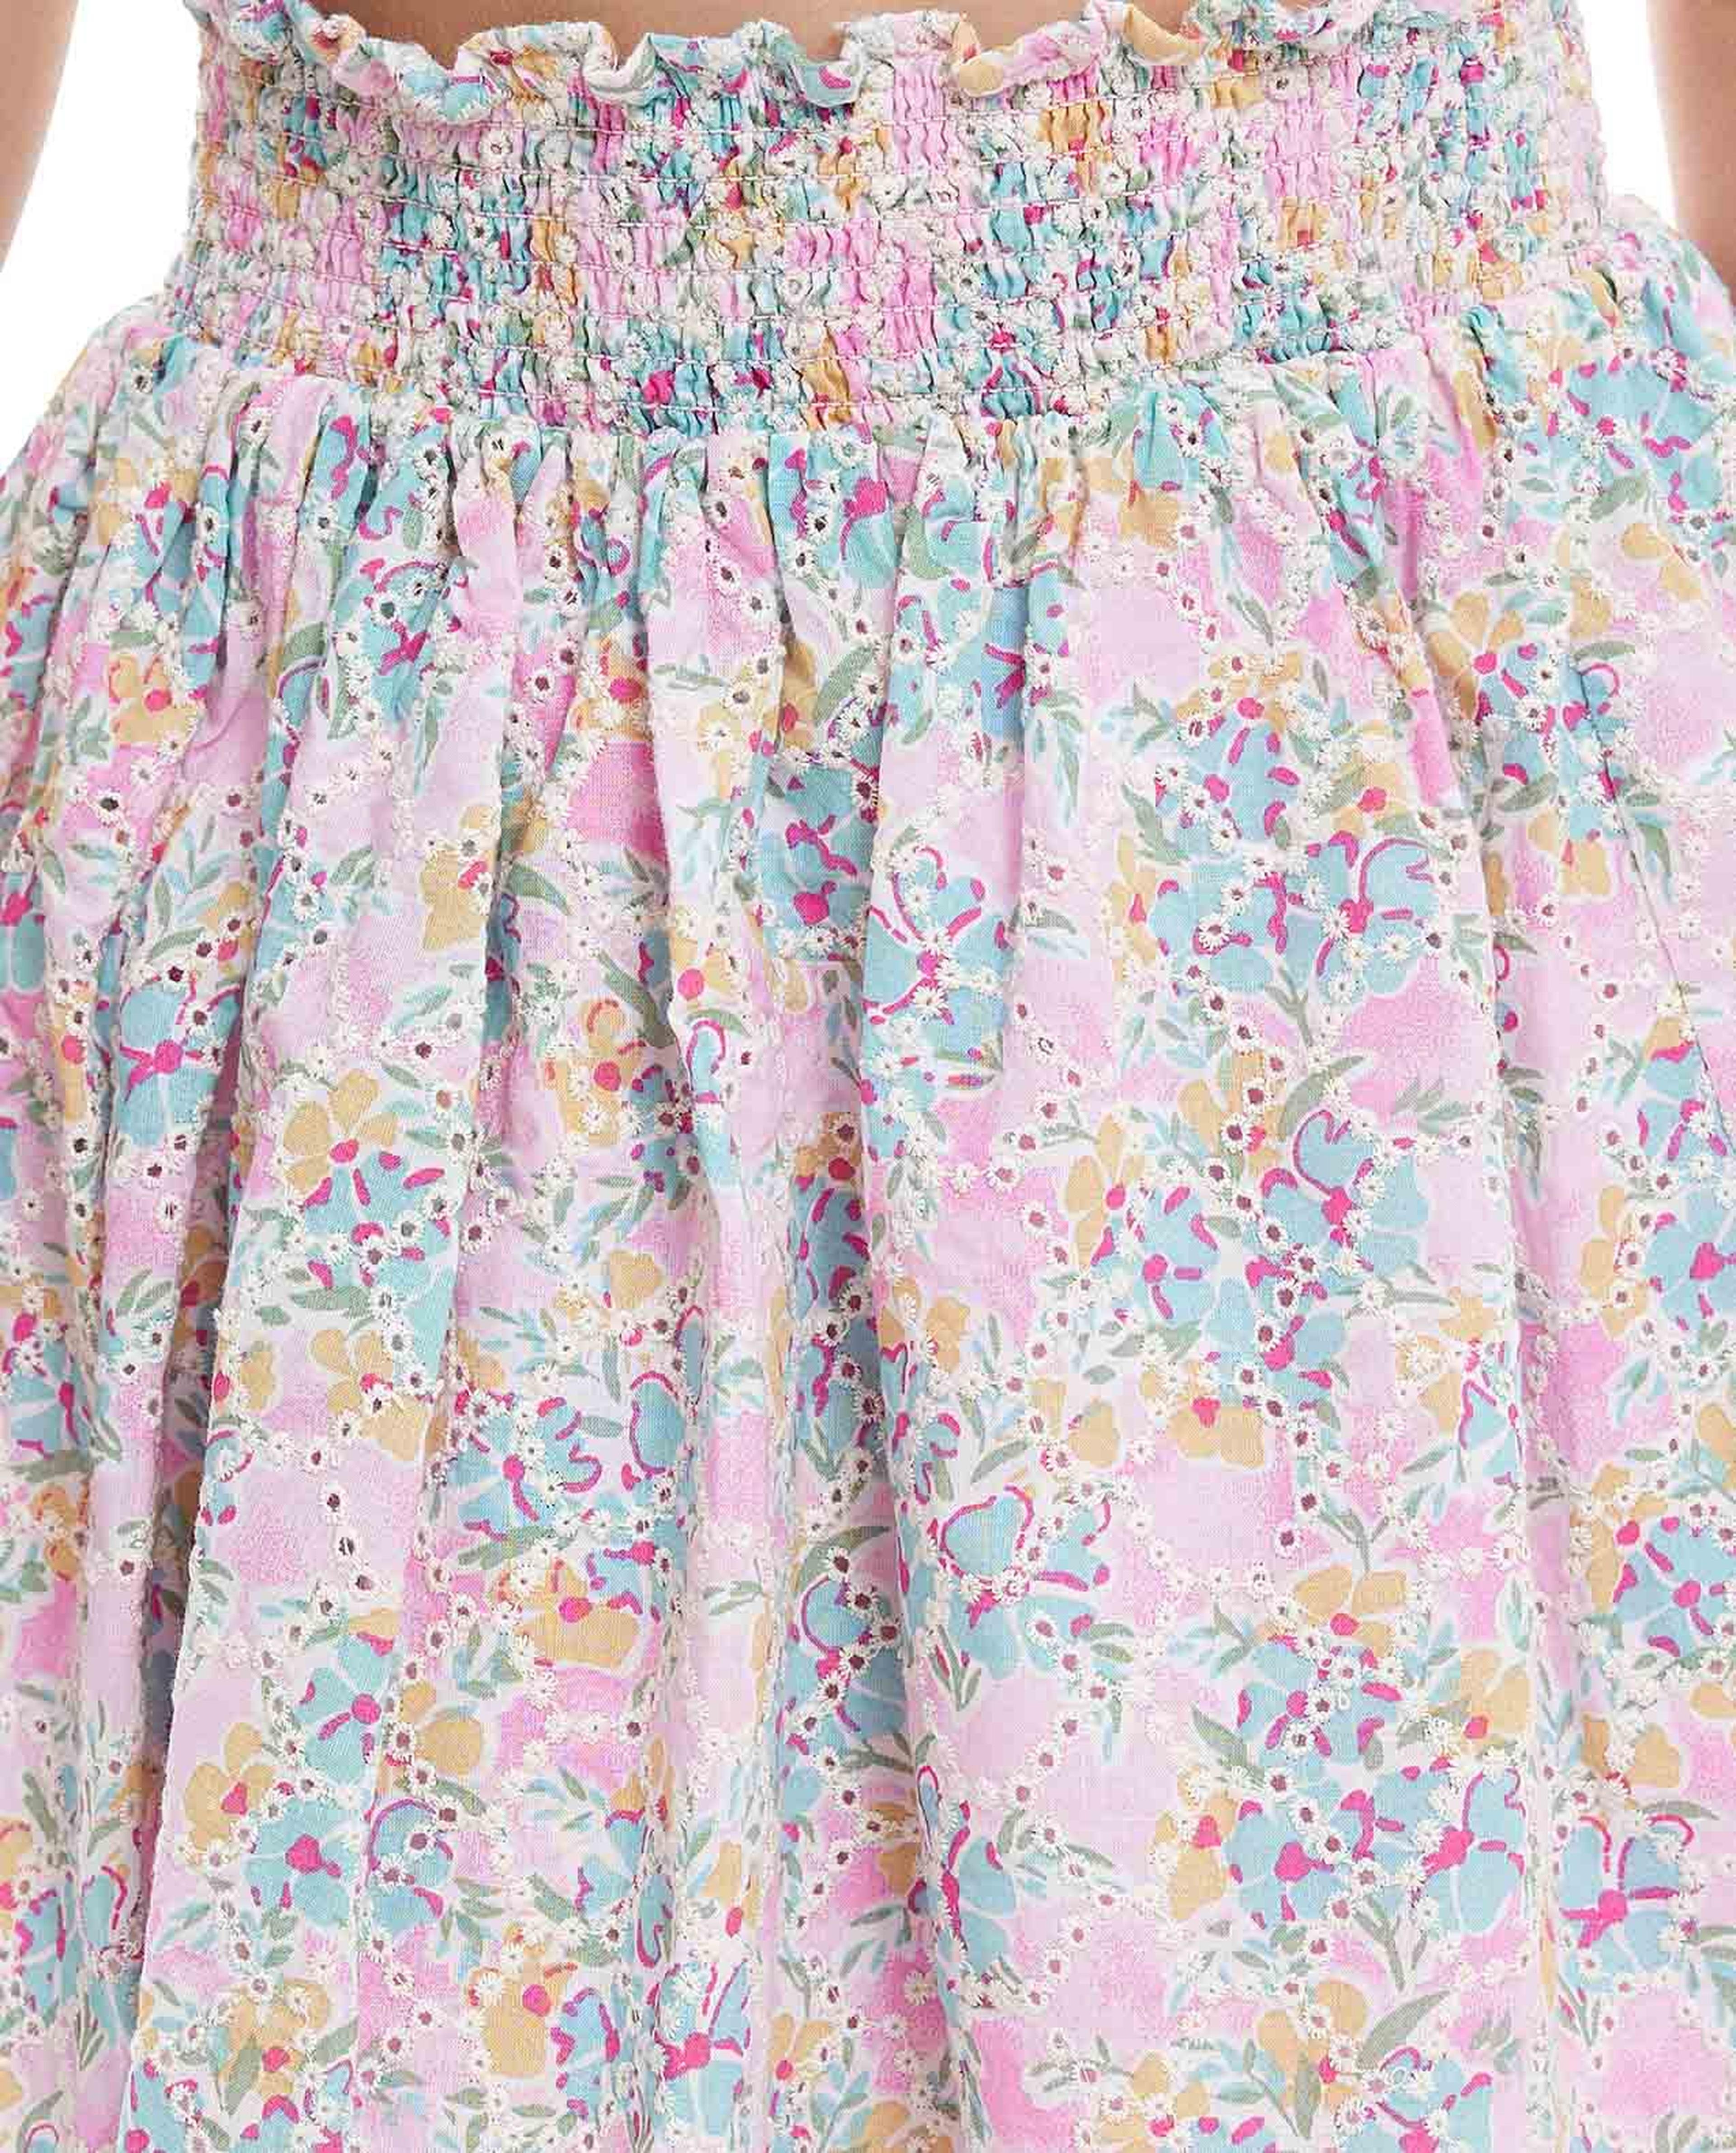 Floral Print Mini Skirt with Elastic Waist